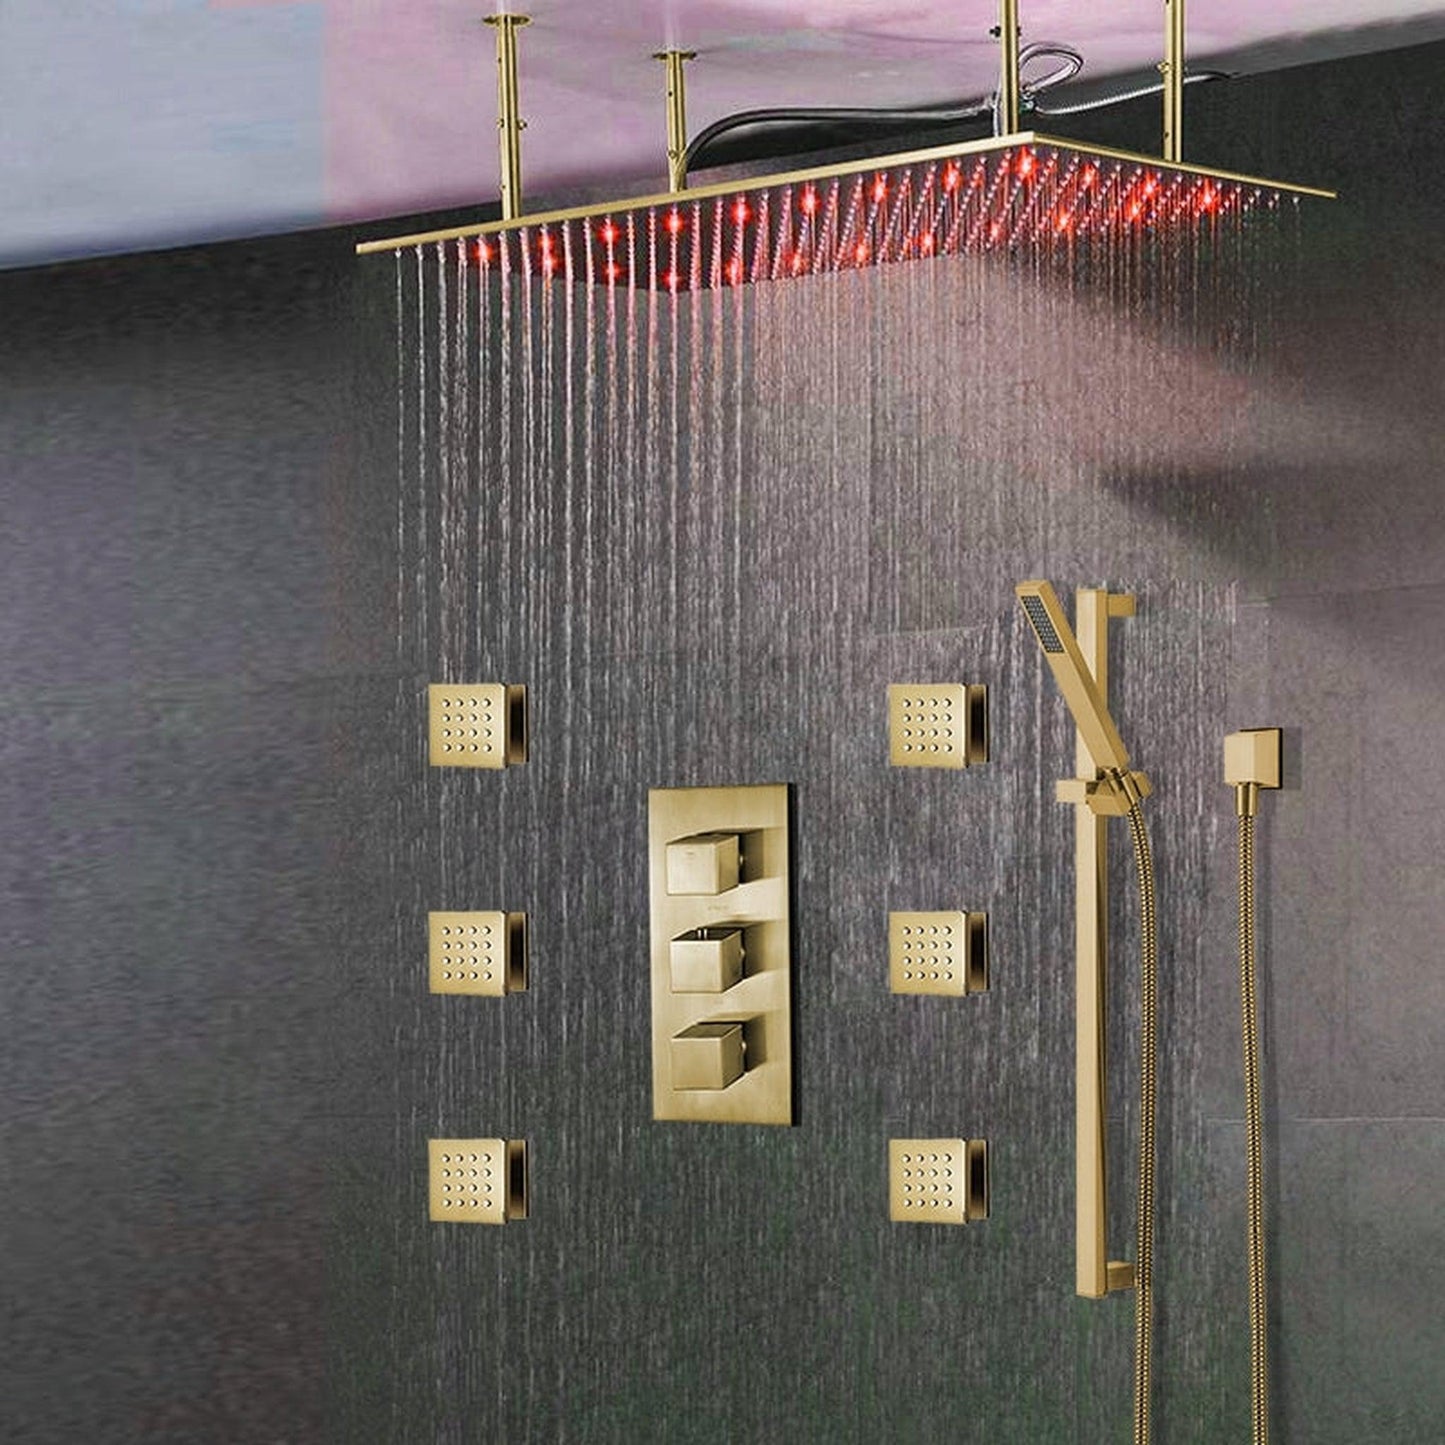 Fontana Saint Denis Brushed Gold Large Ceiling Mounted LED Rain Shower System With 6-Body Jets & Hand Shower